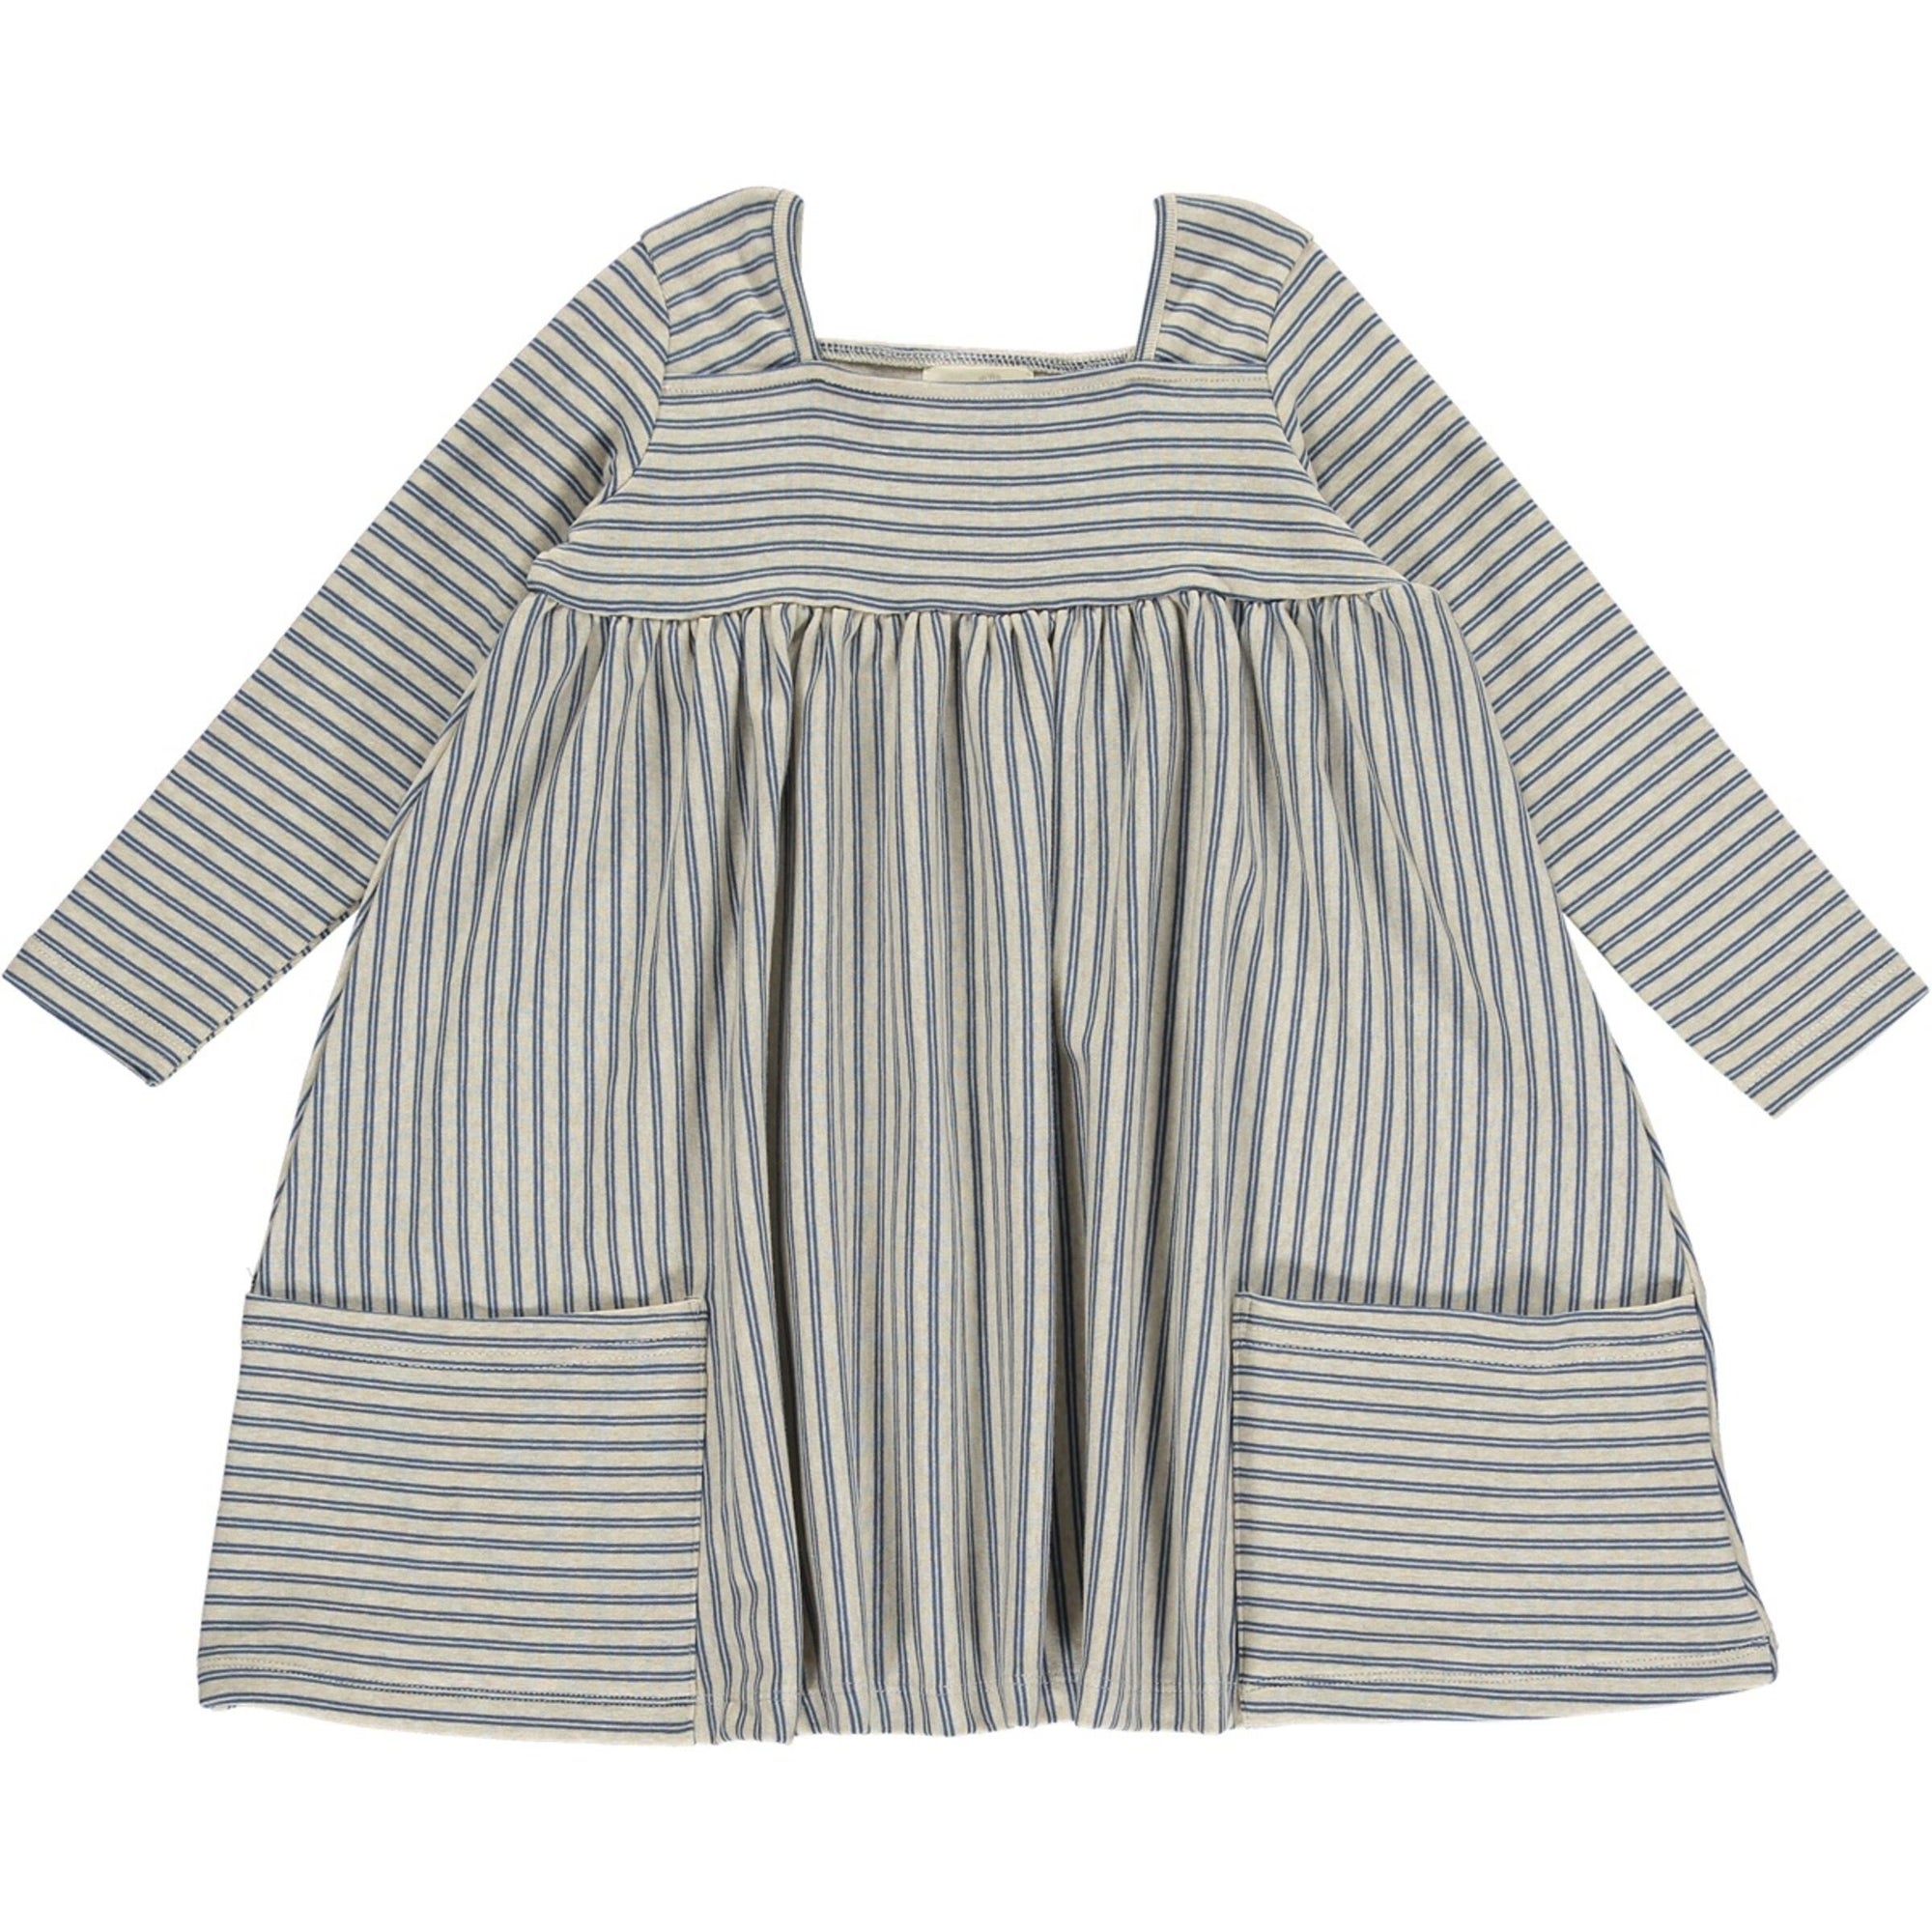 Vignette Rylie Long Sleeve Dress / Blue & Cream Stripe